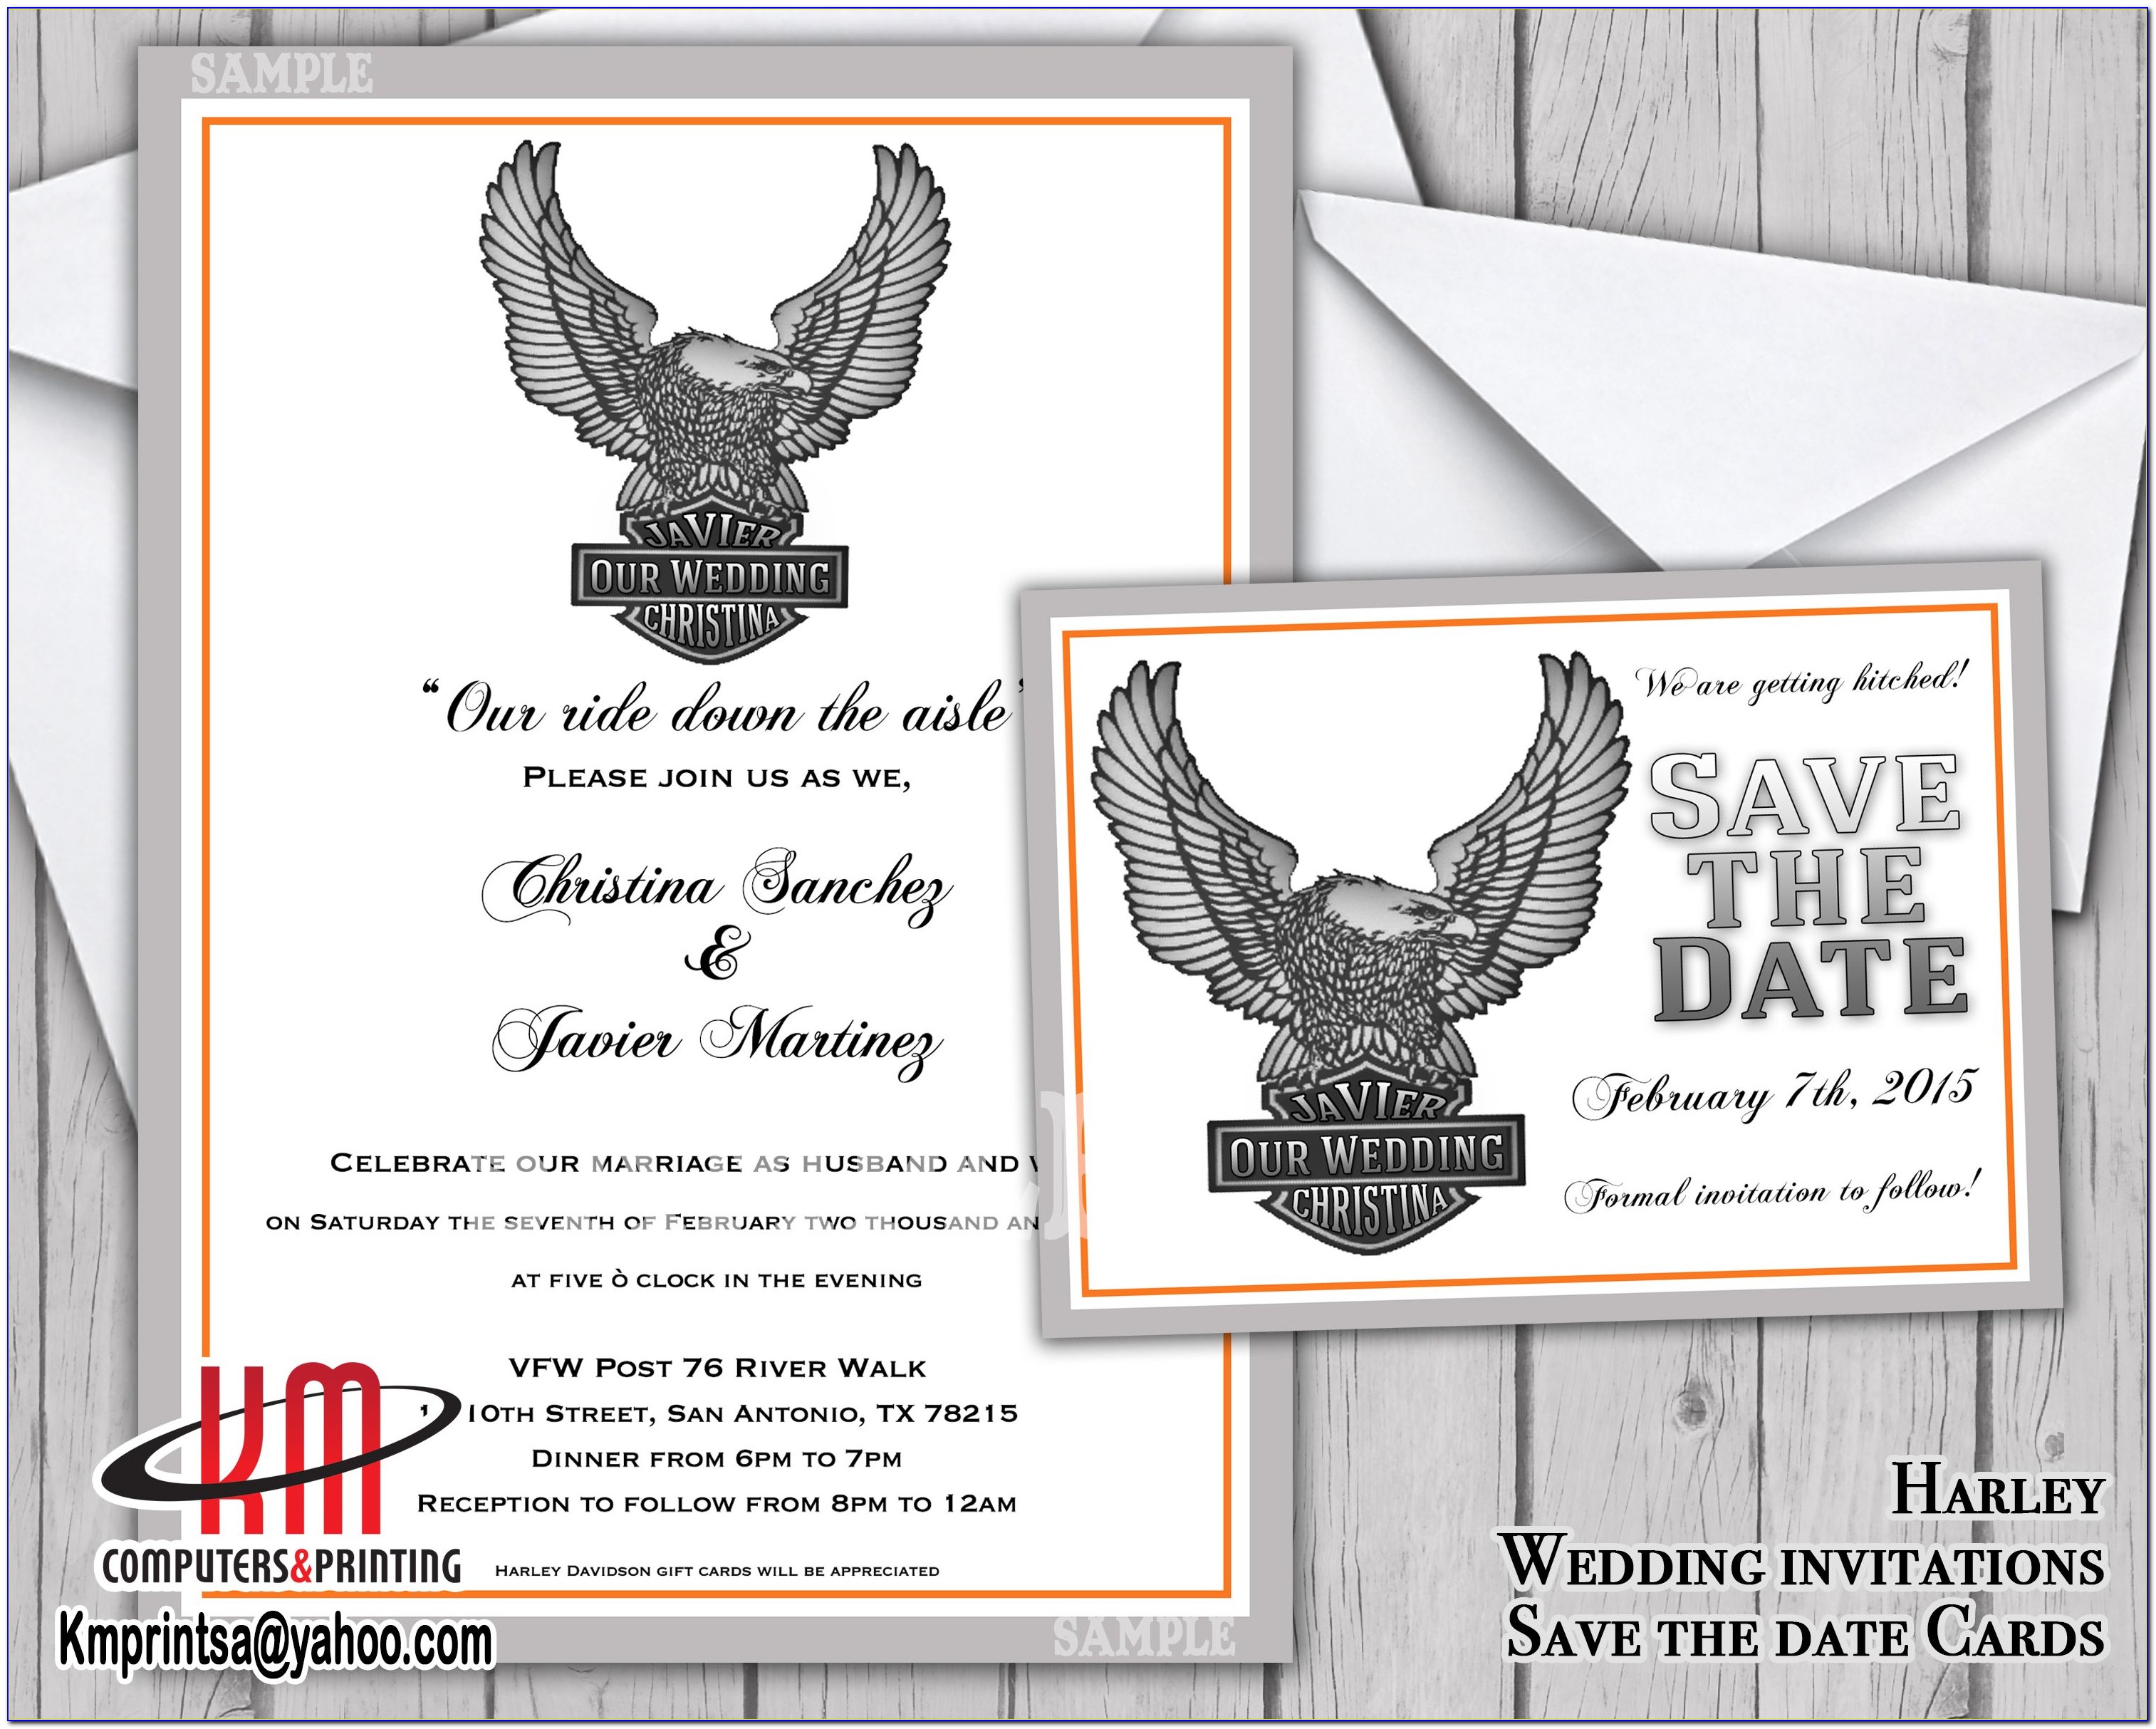 Harley Davidson Themed Wedding Invitations